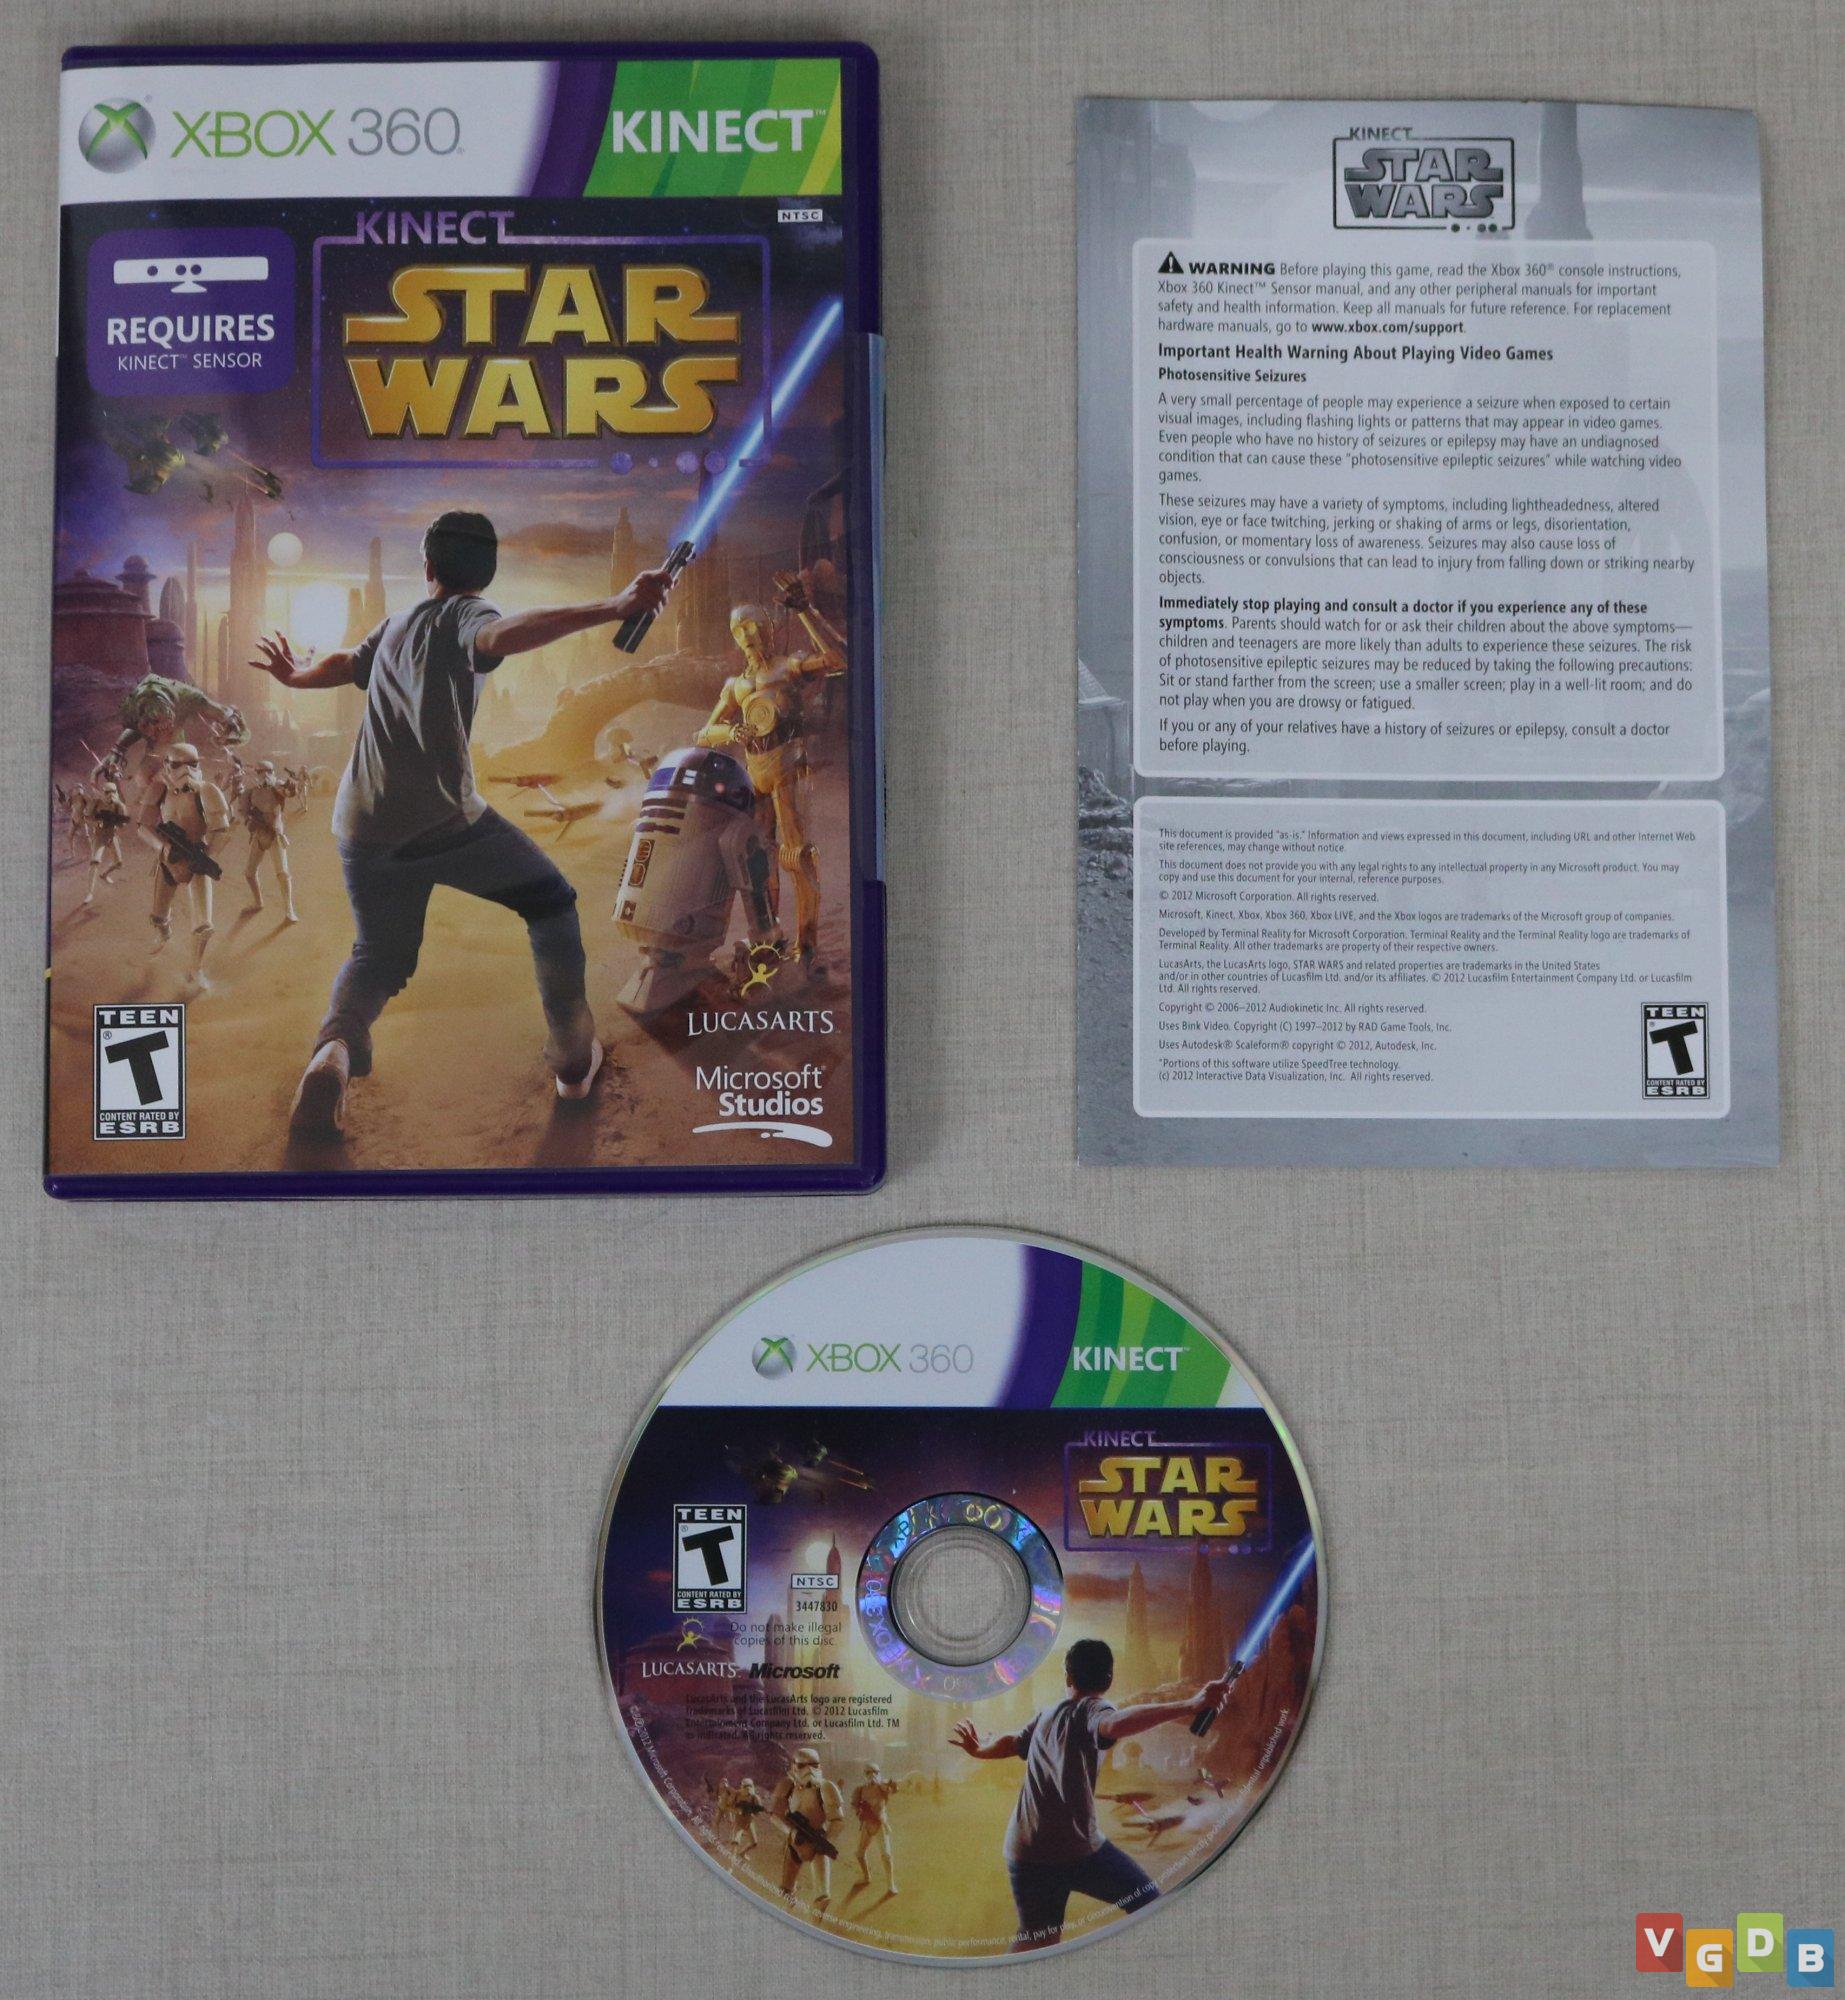 Jogo Kinect Rush - Xbox 360 - Foti Play Games